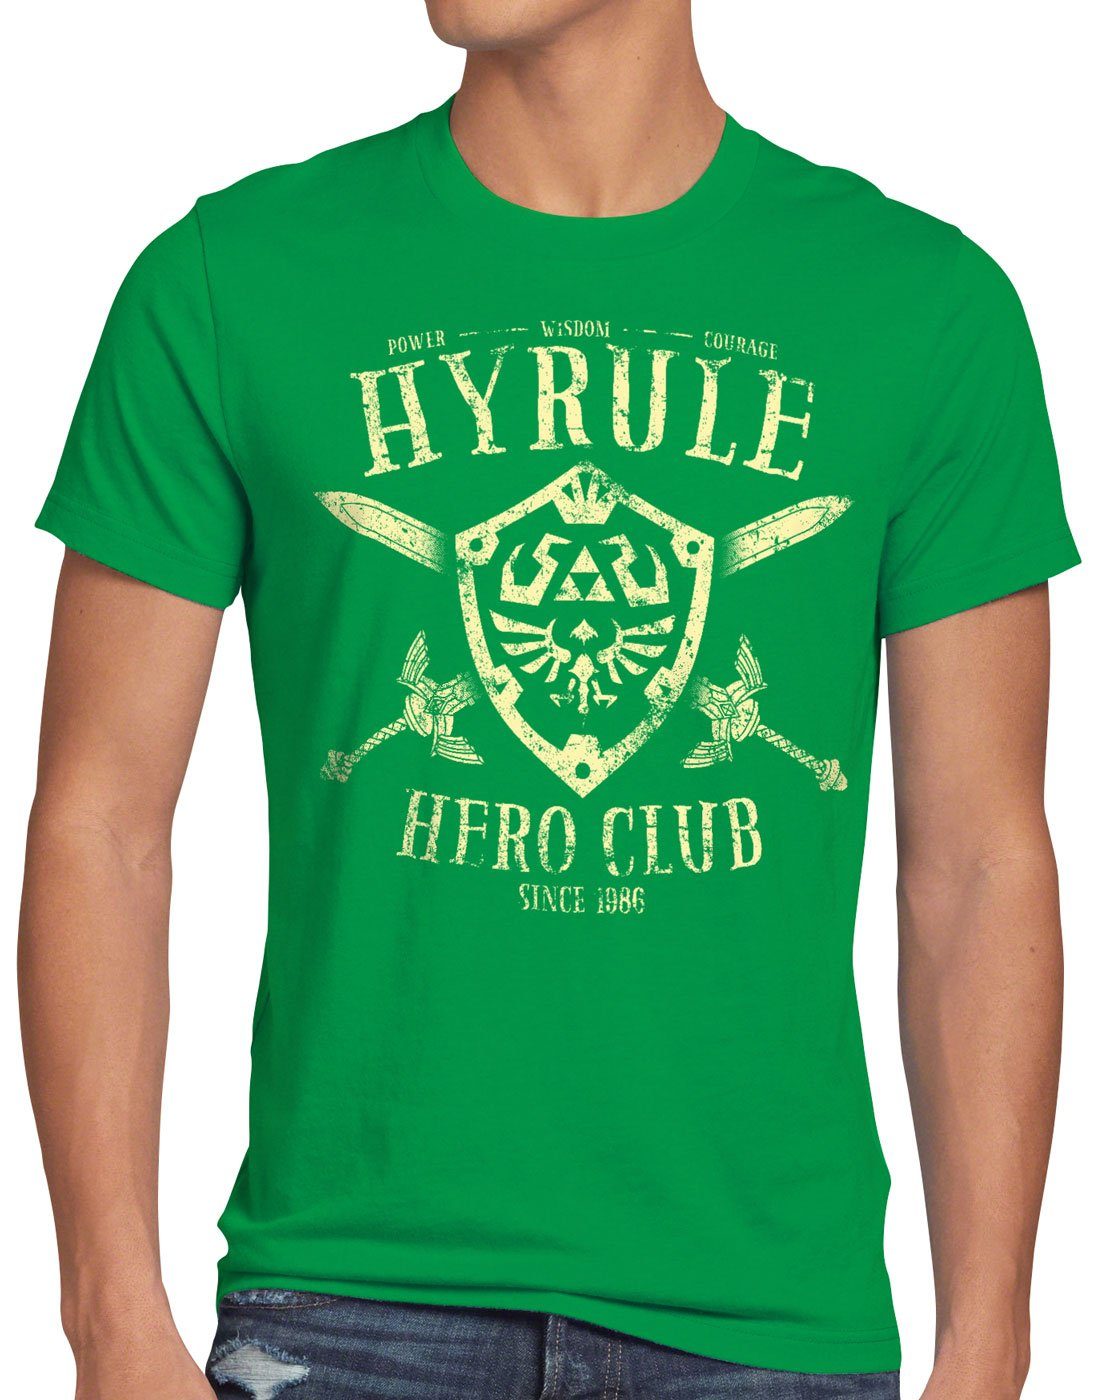 Print-Shirt T-Shirt Herren style3 3ds Ocarina grün Club Hyrule Hero link